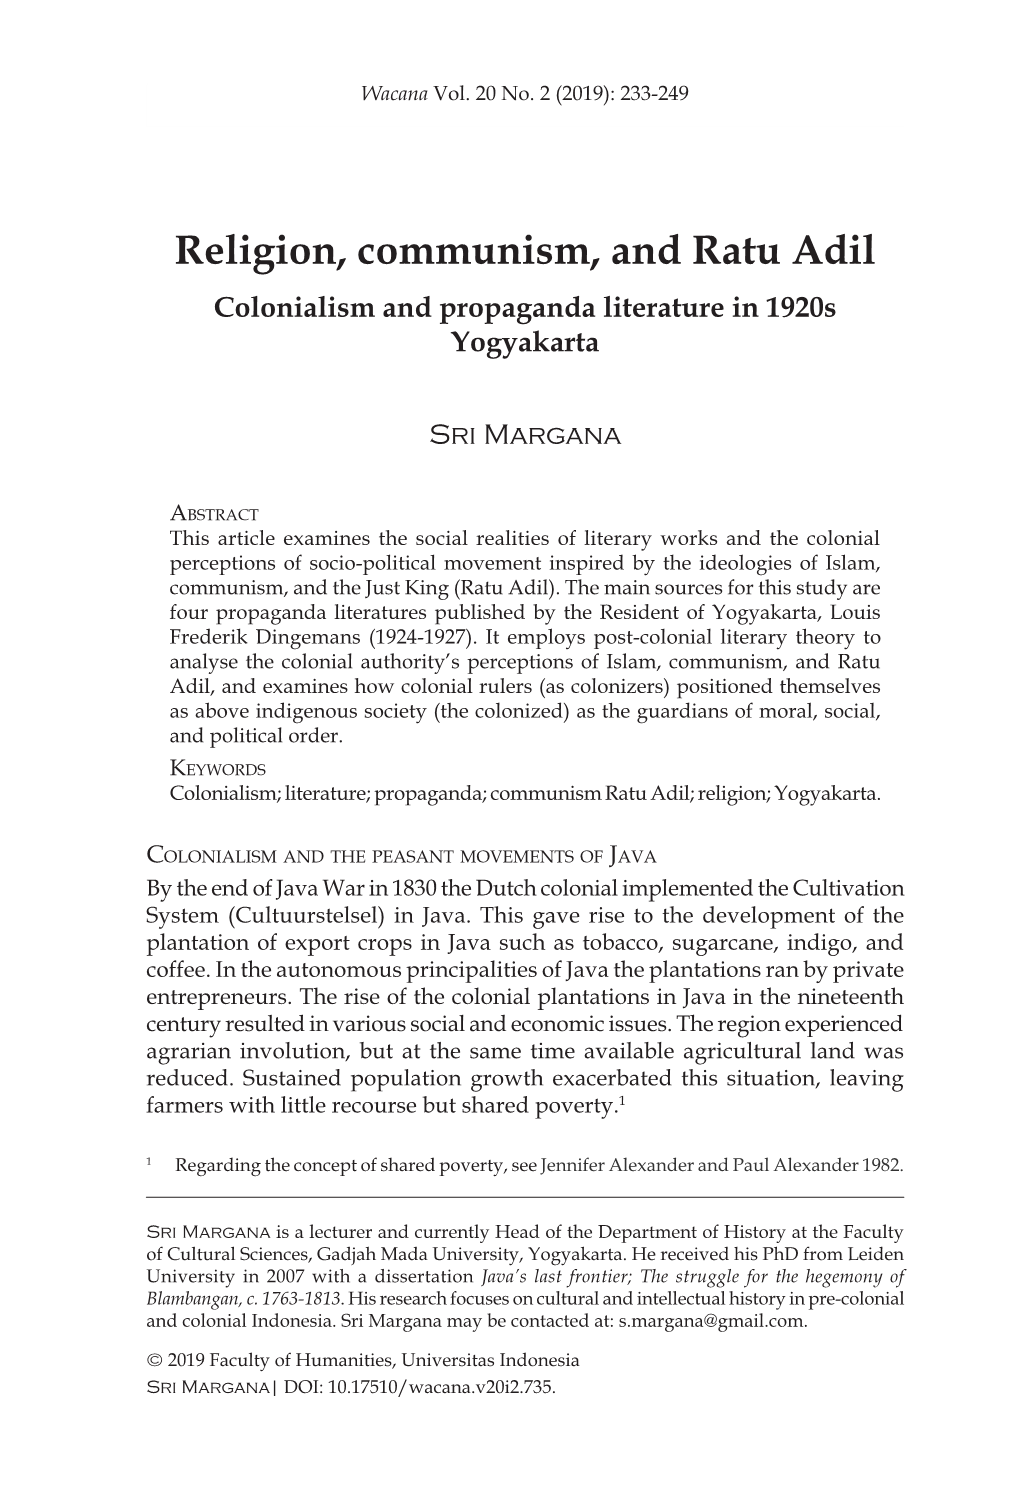 Religion, Communism, and Ratu Adil Colonialism and Propaganda Literature in 1920S Yogyakarta